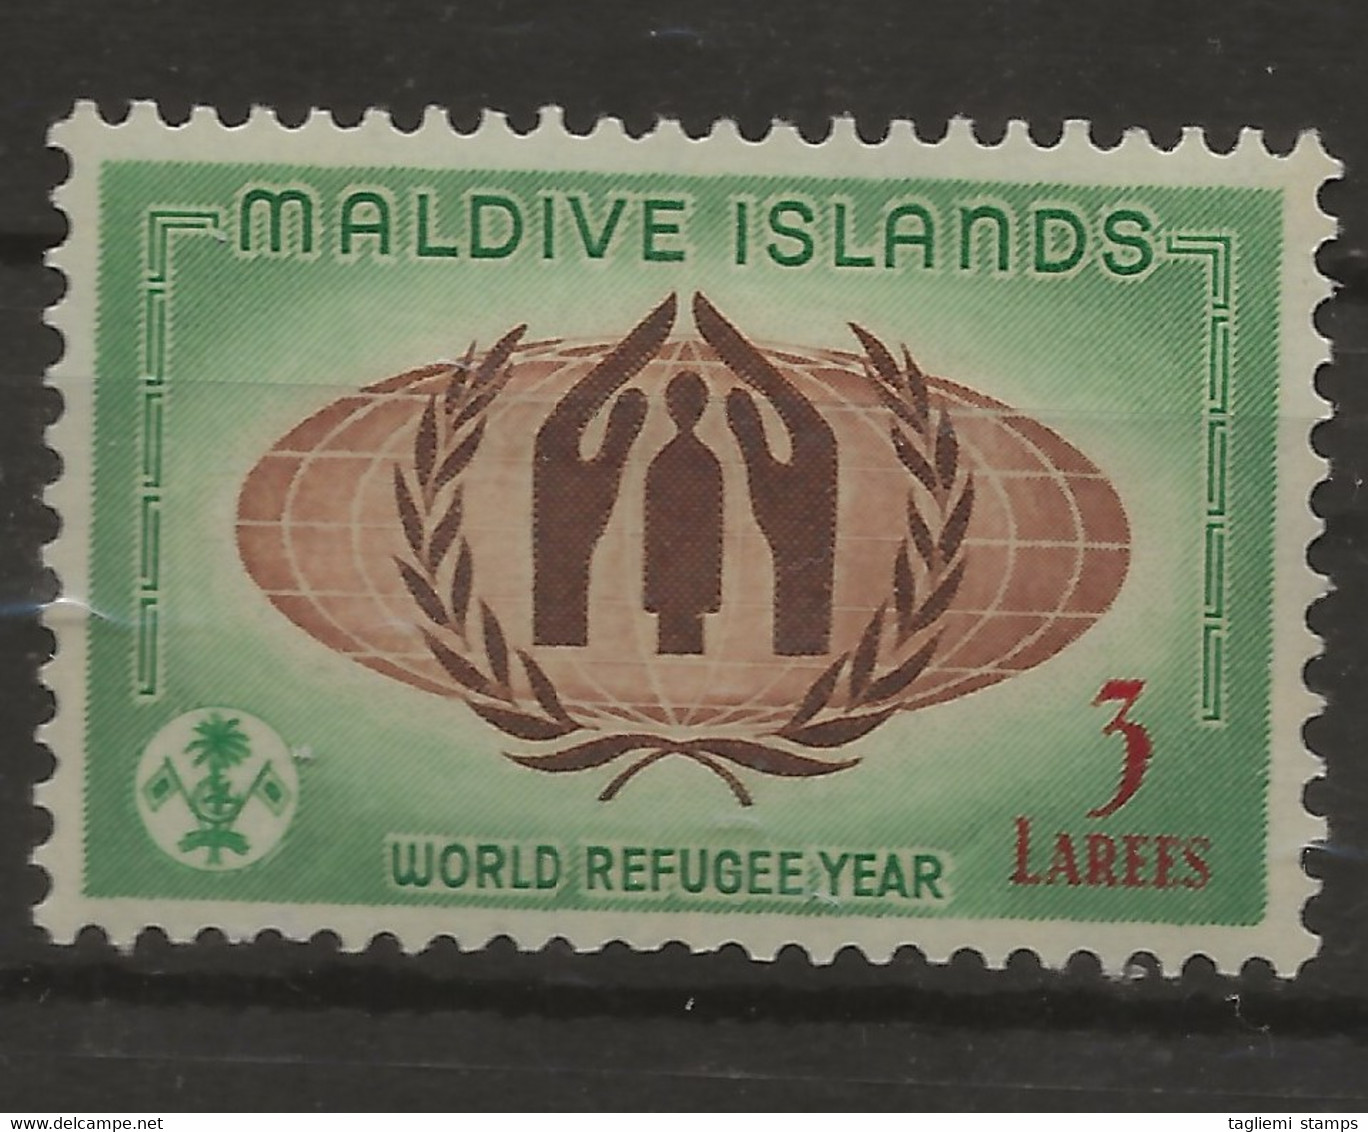 Maldives, 1960, SG  63, Mint Hinged - Maldiven (...-1965)